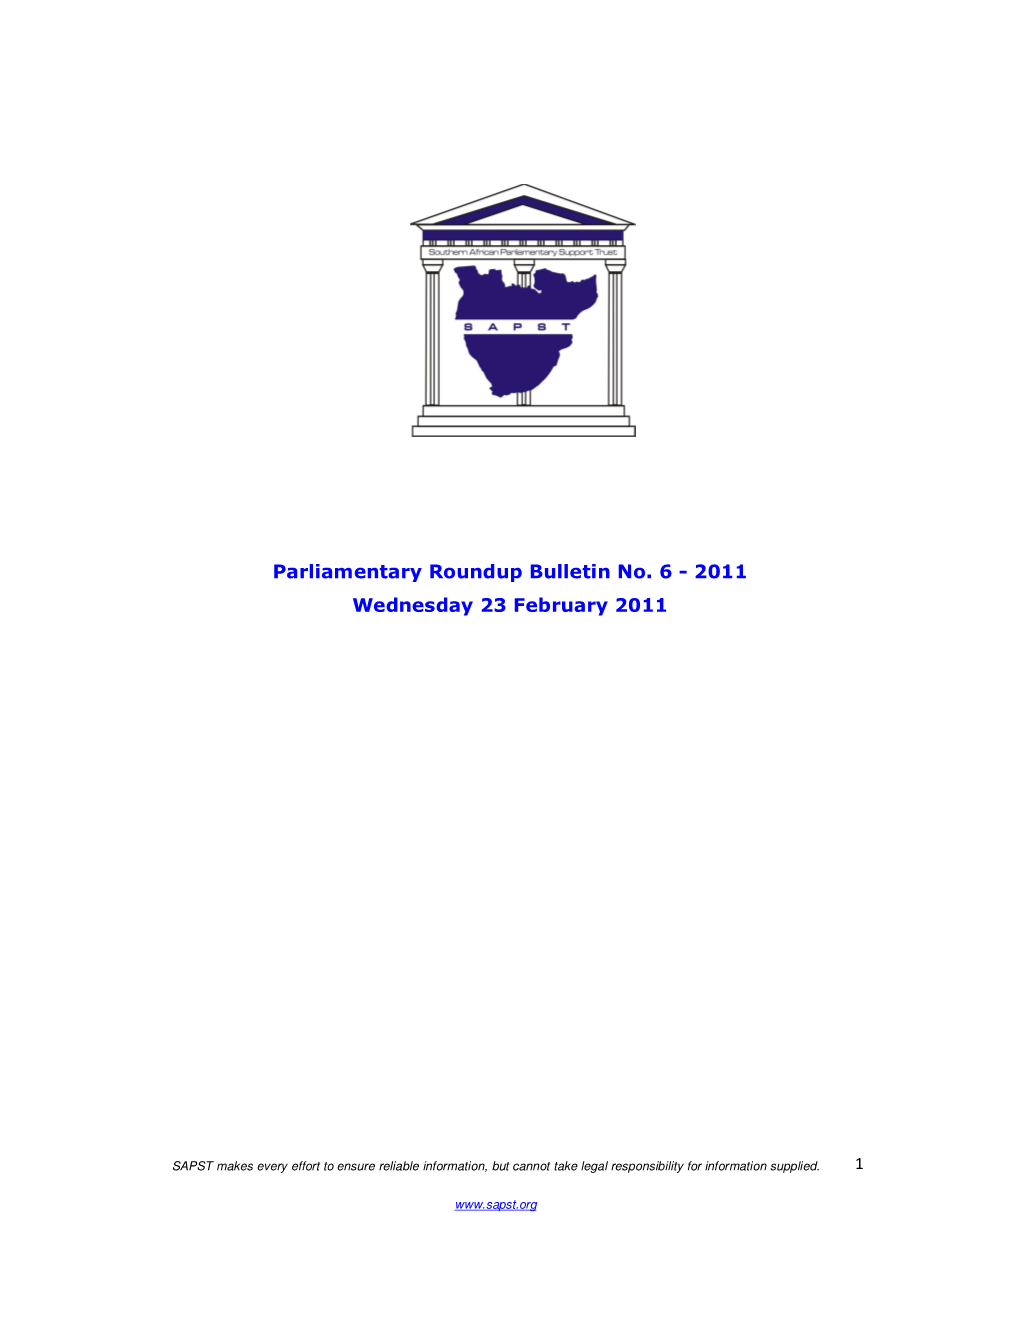 Parliamentary Roundup Bulletin No. 6 - 2011 Wednesday 23 February 2011